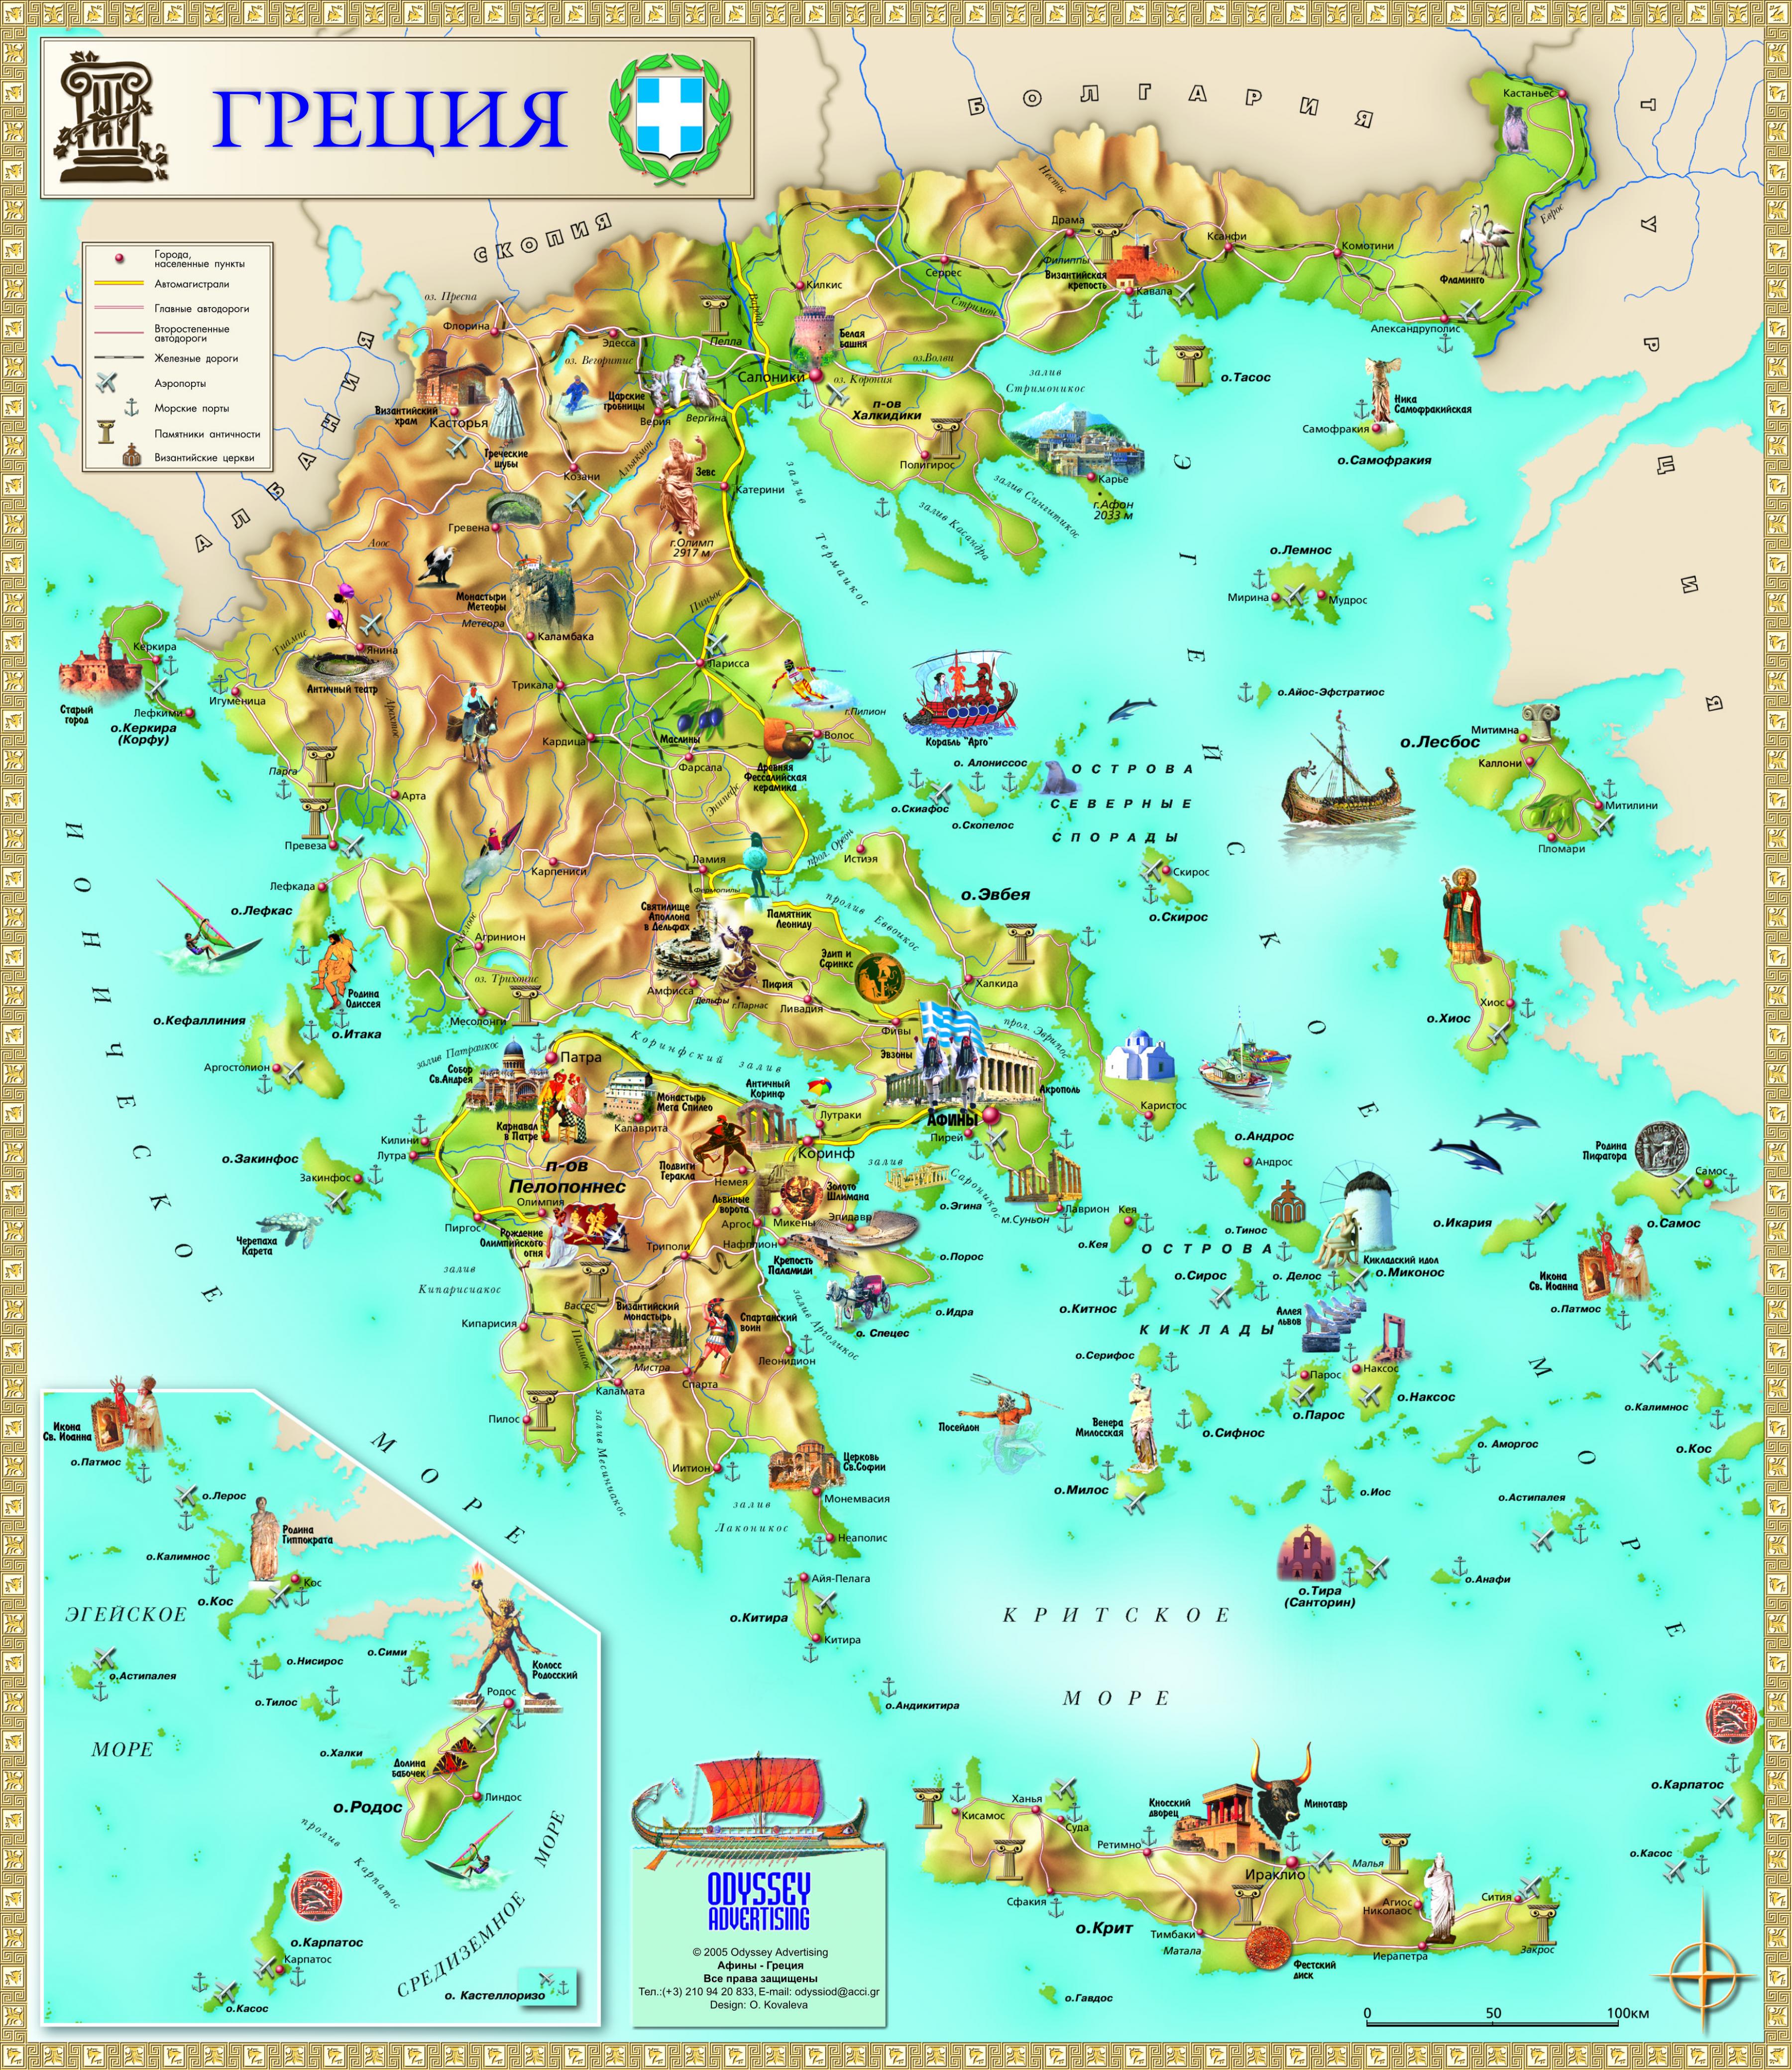 tourist map of greece